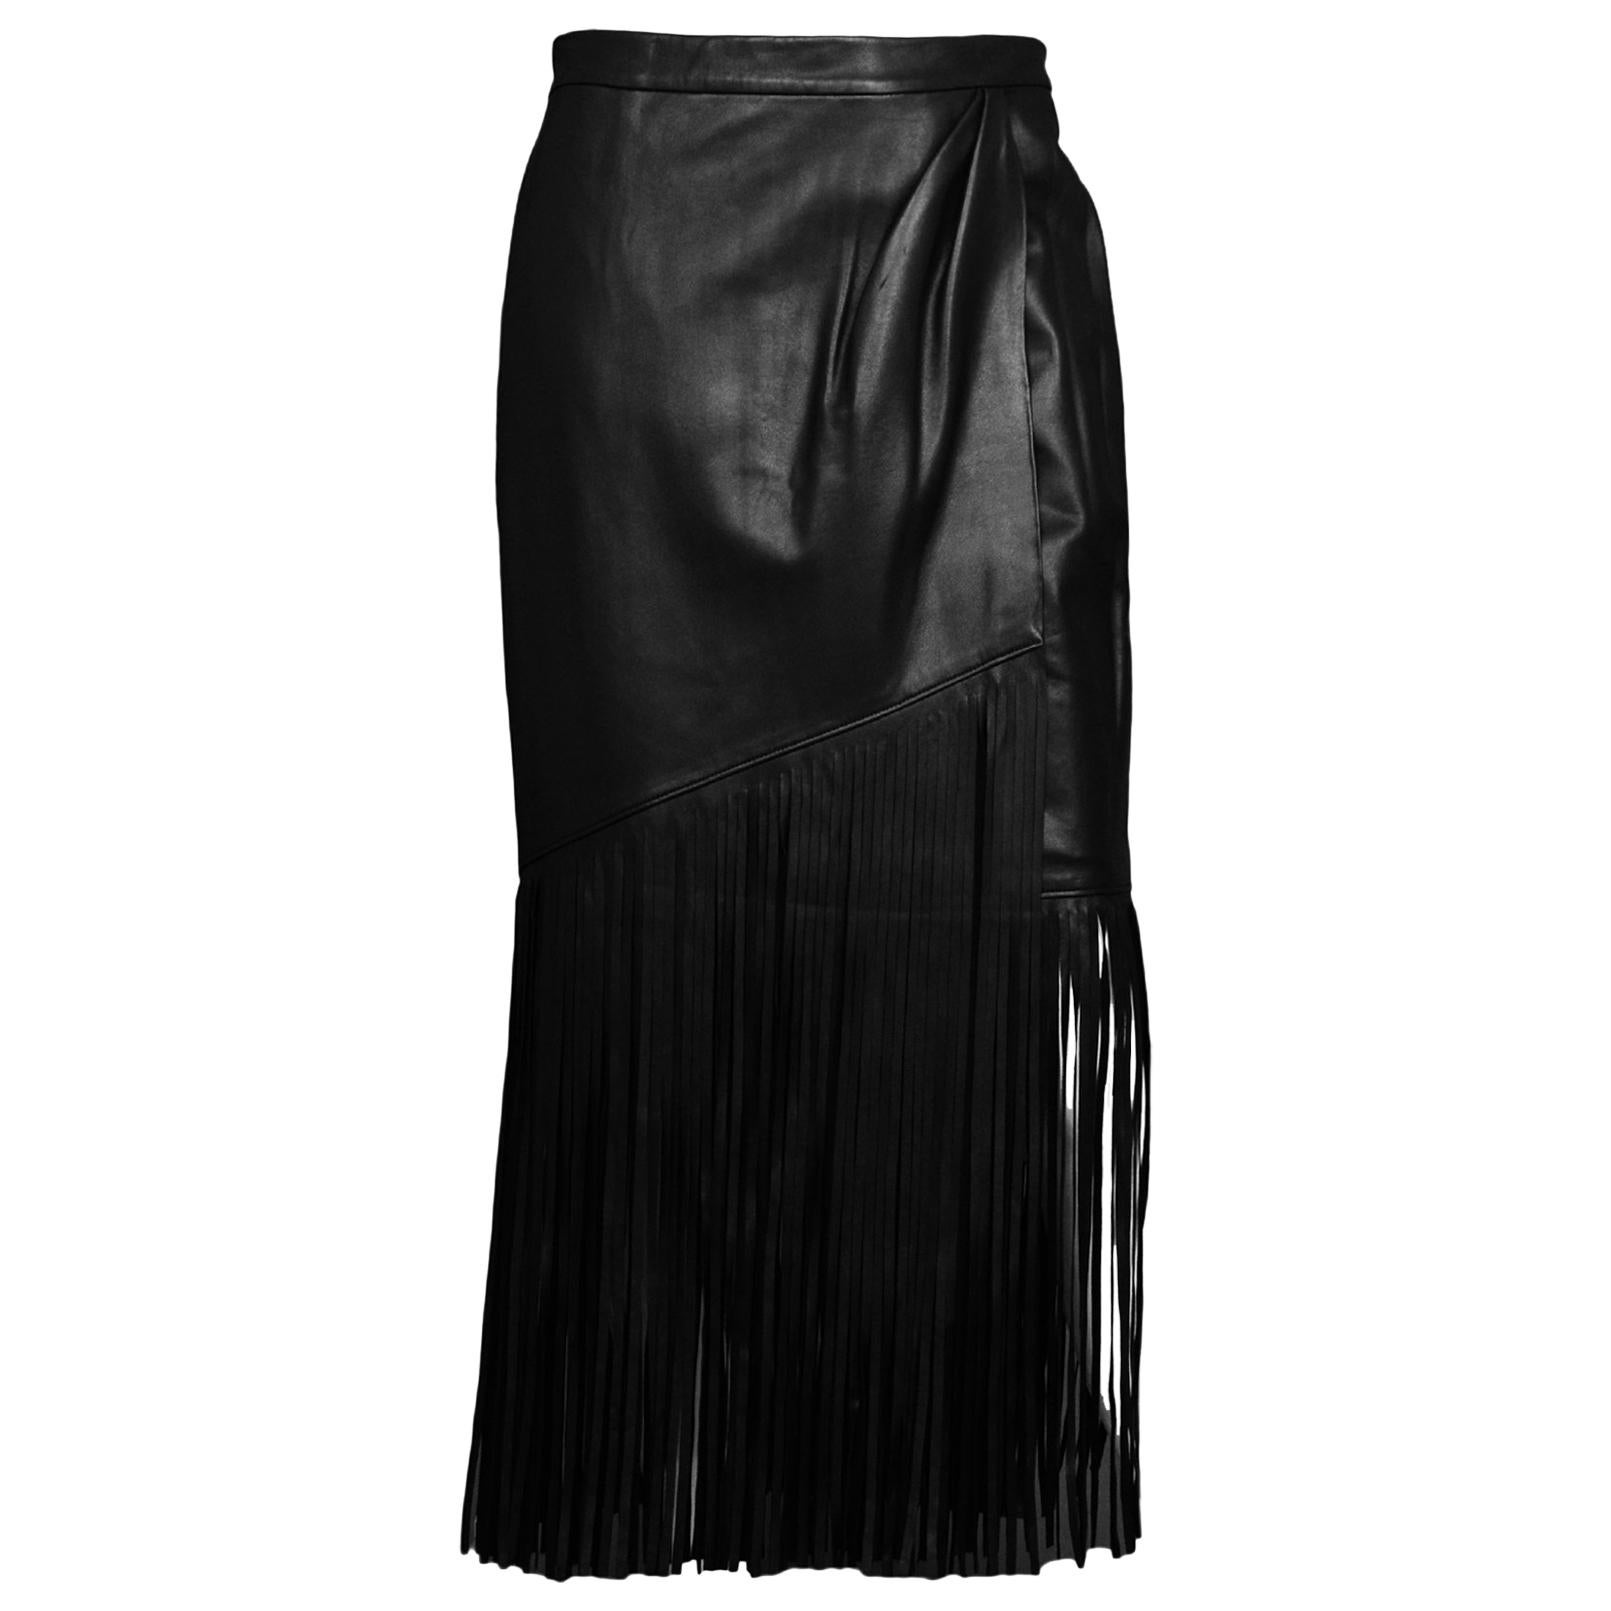 Tamara Mellon Black Leather Fringe Skirt NWT Sz 10